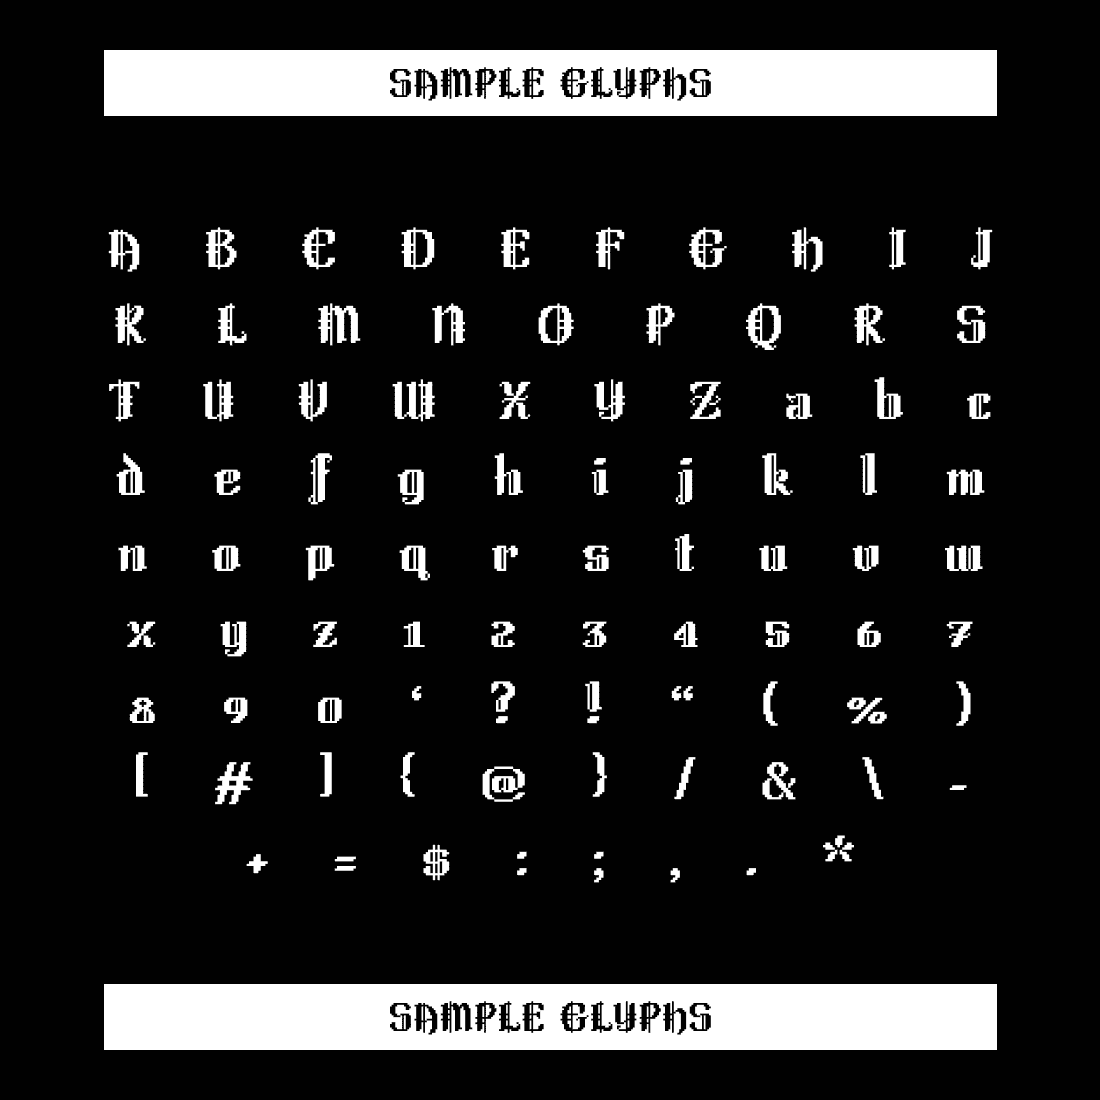 Feralberry Pixel Font Sample Glyphs.